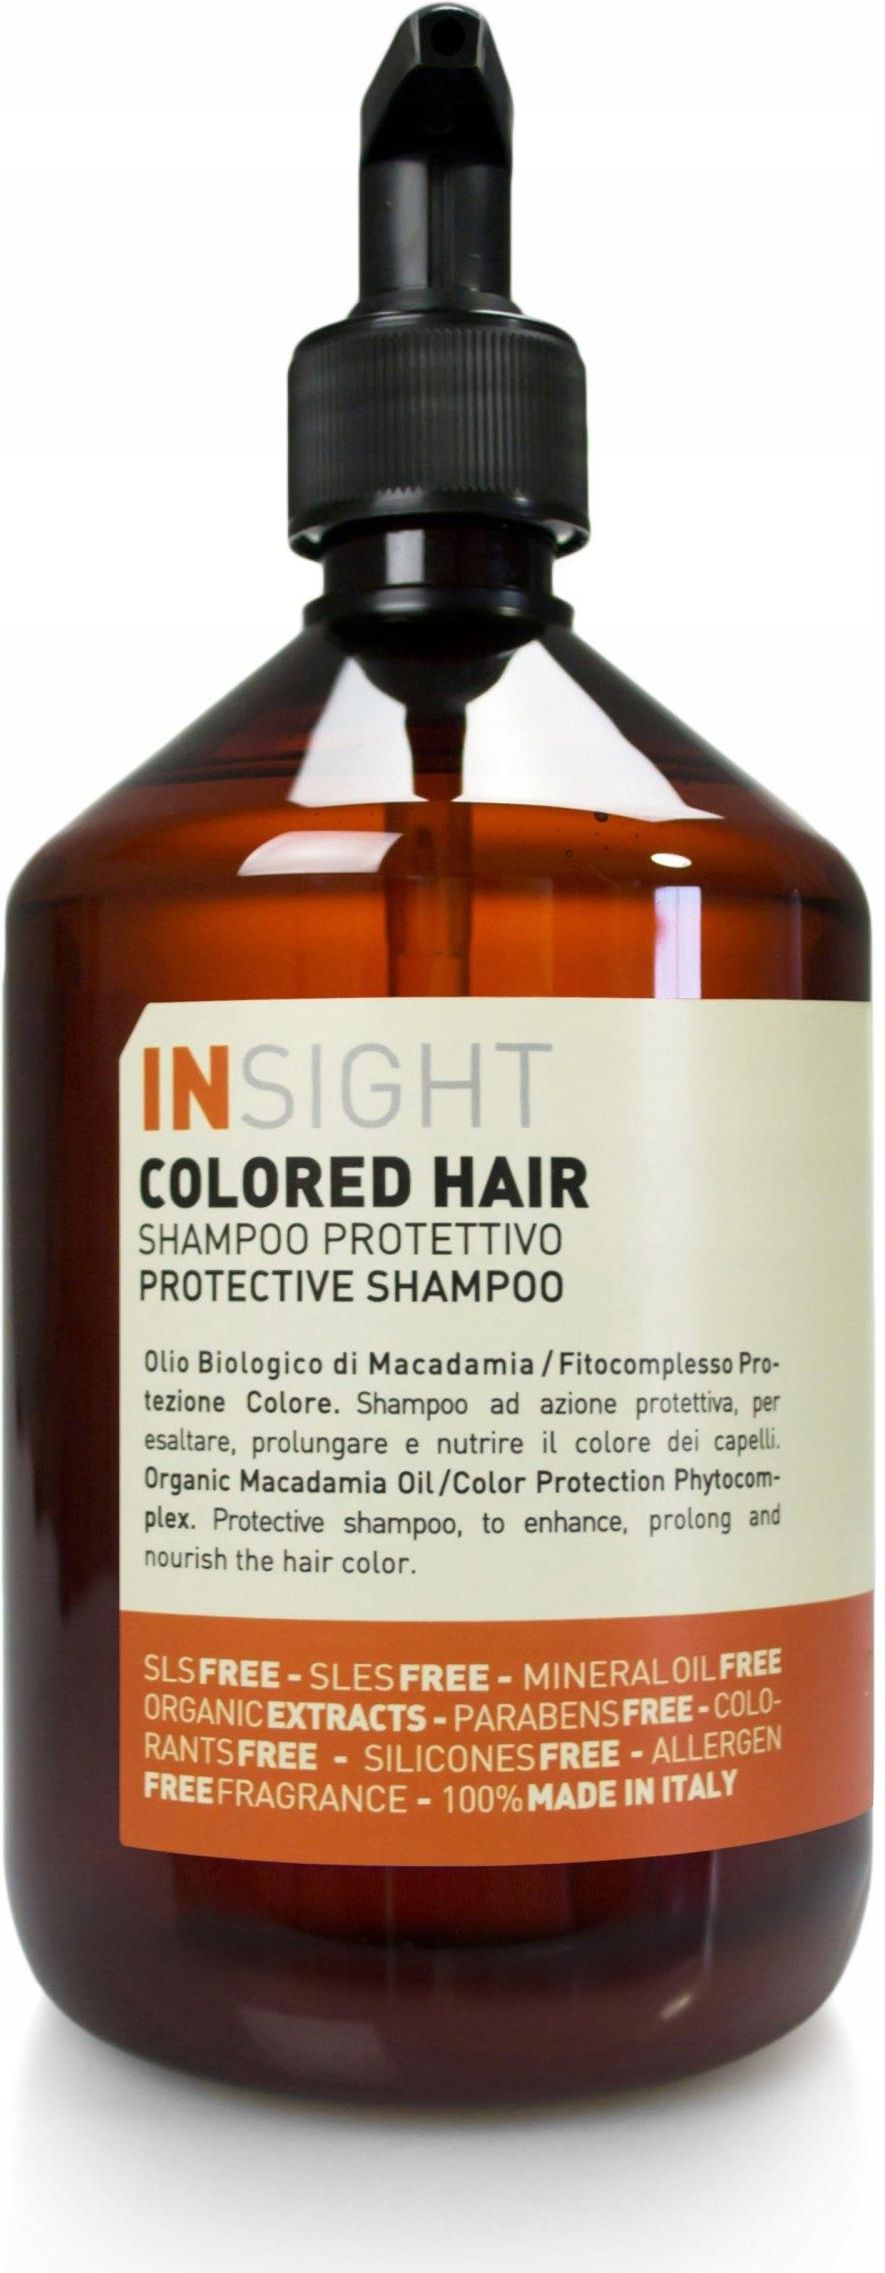 insight colored hair szampon 400ml